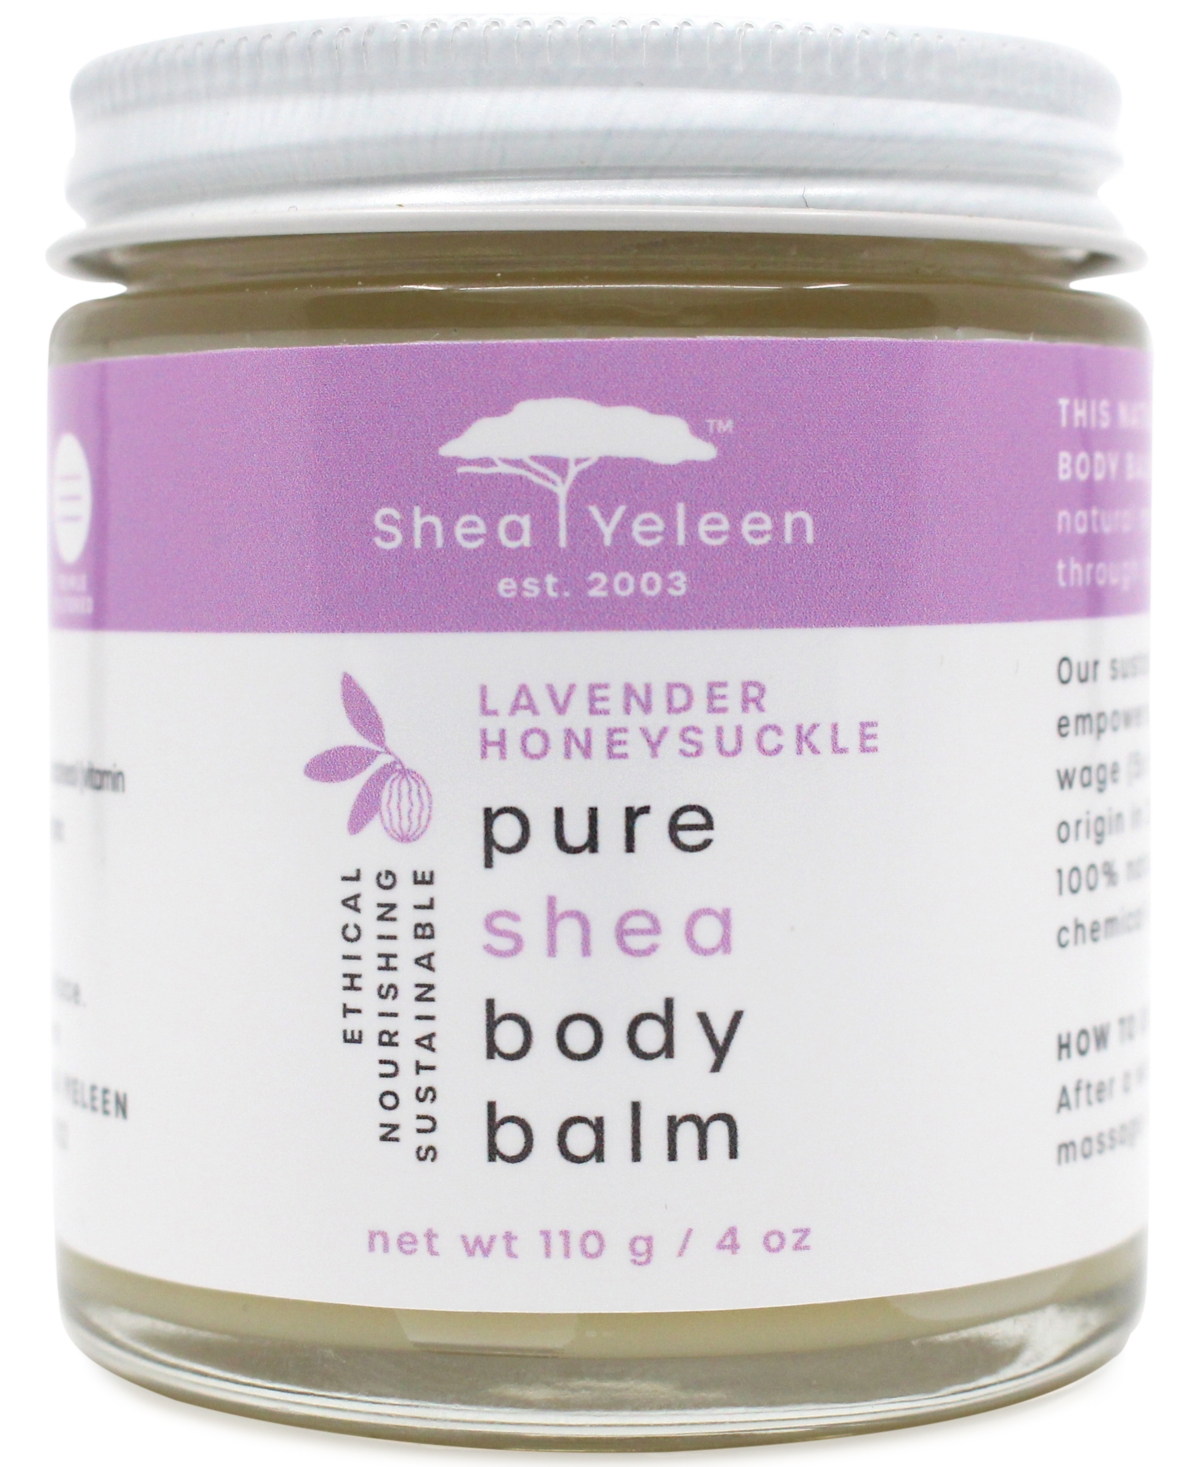 Lavender Honeysuckle Shea Body Balm, 4-oz.